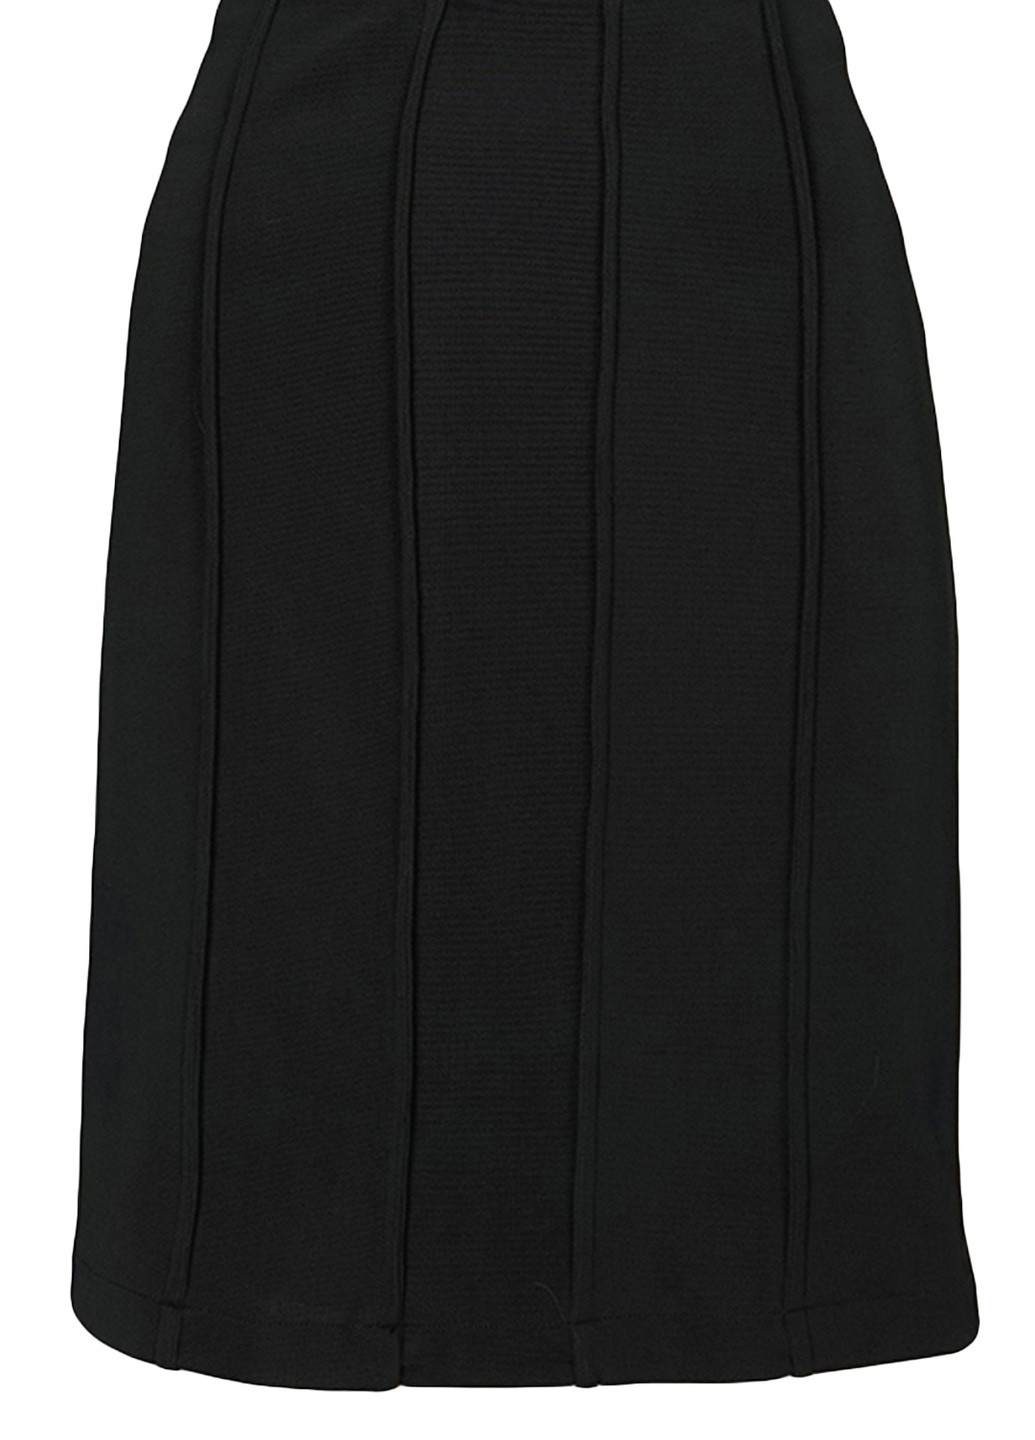 Черная офисная юбка Forza Viva карандаш